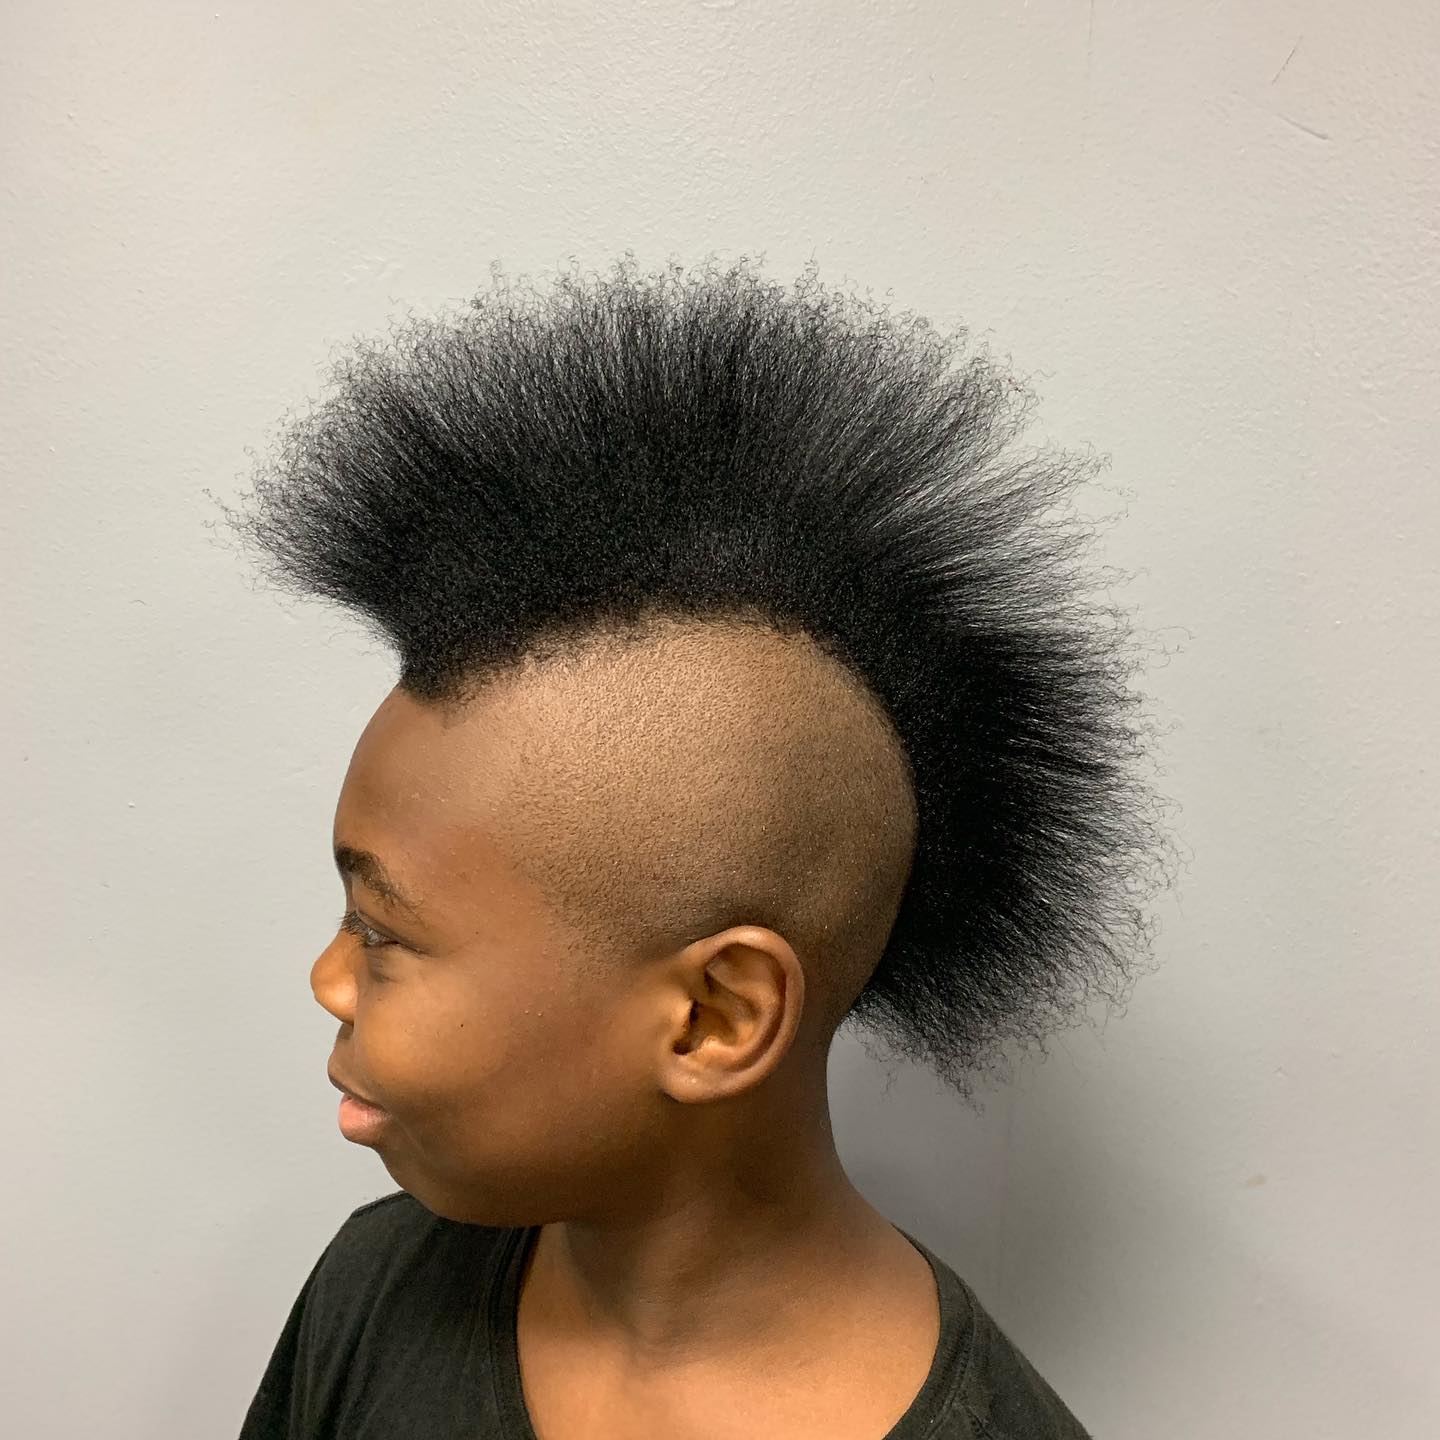 Mohawk Vertical Haircut